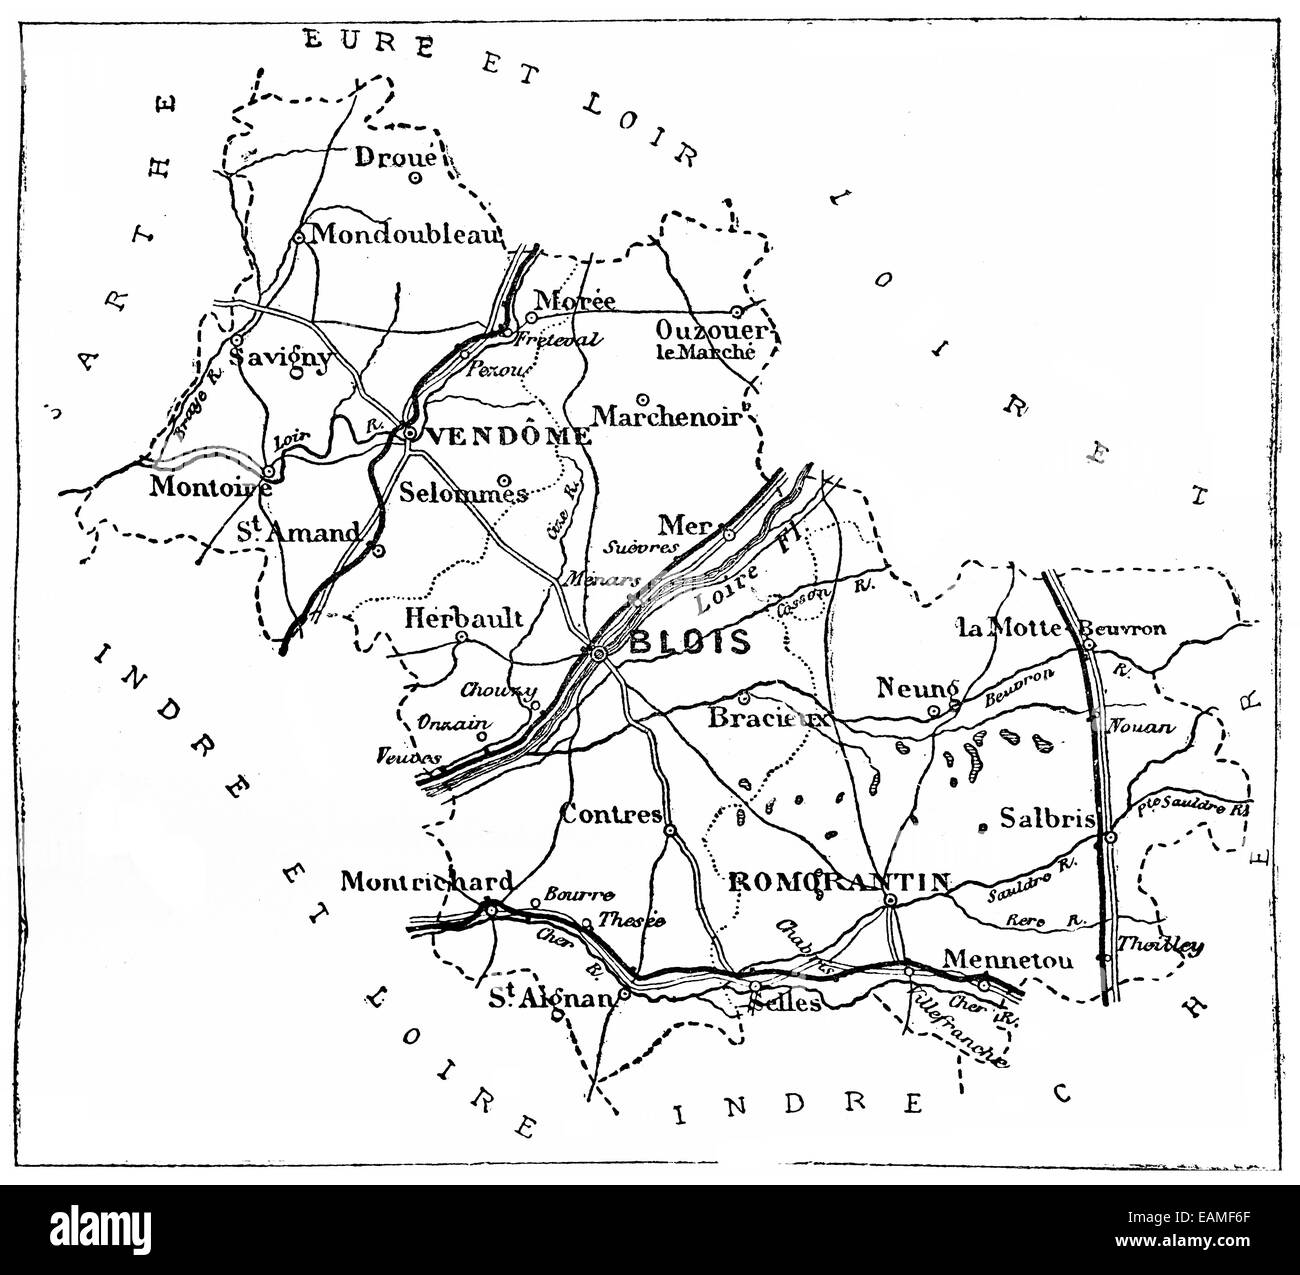 Mappa del dipartimento Loir-et-Cher, vintage illustrazioni incise. Journal des Voyages, viaggio ufficiale, (1879-80). Foto Stock